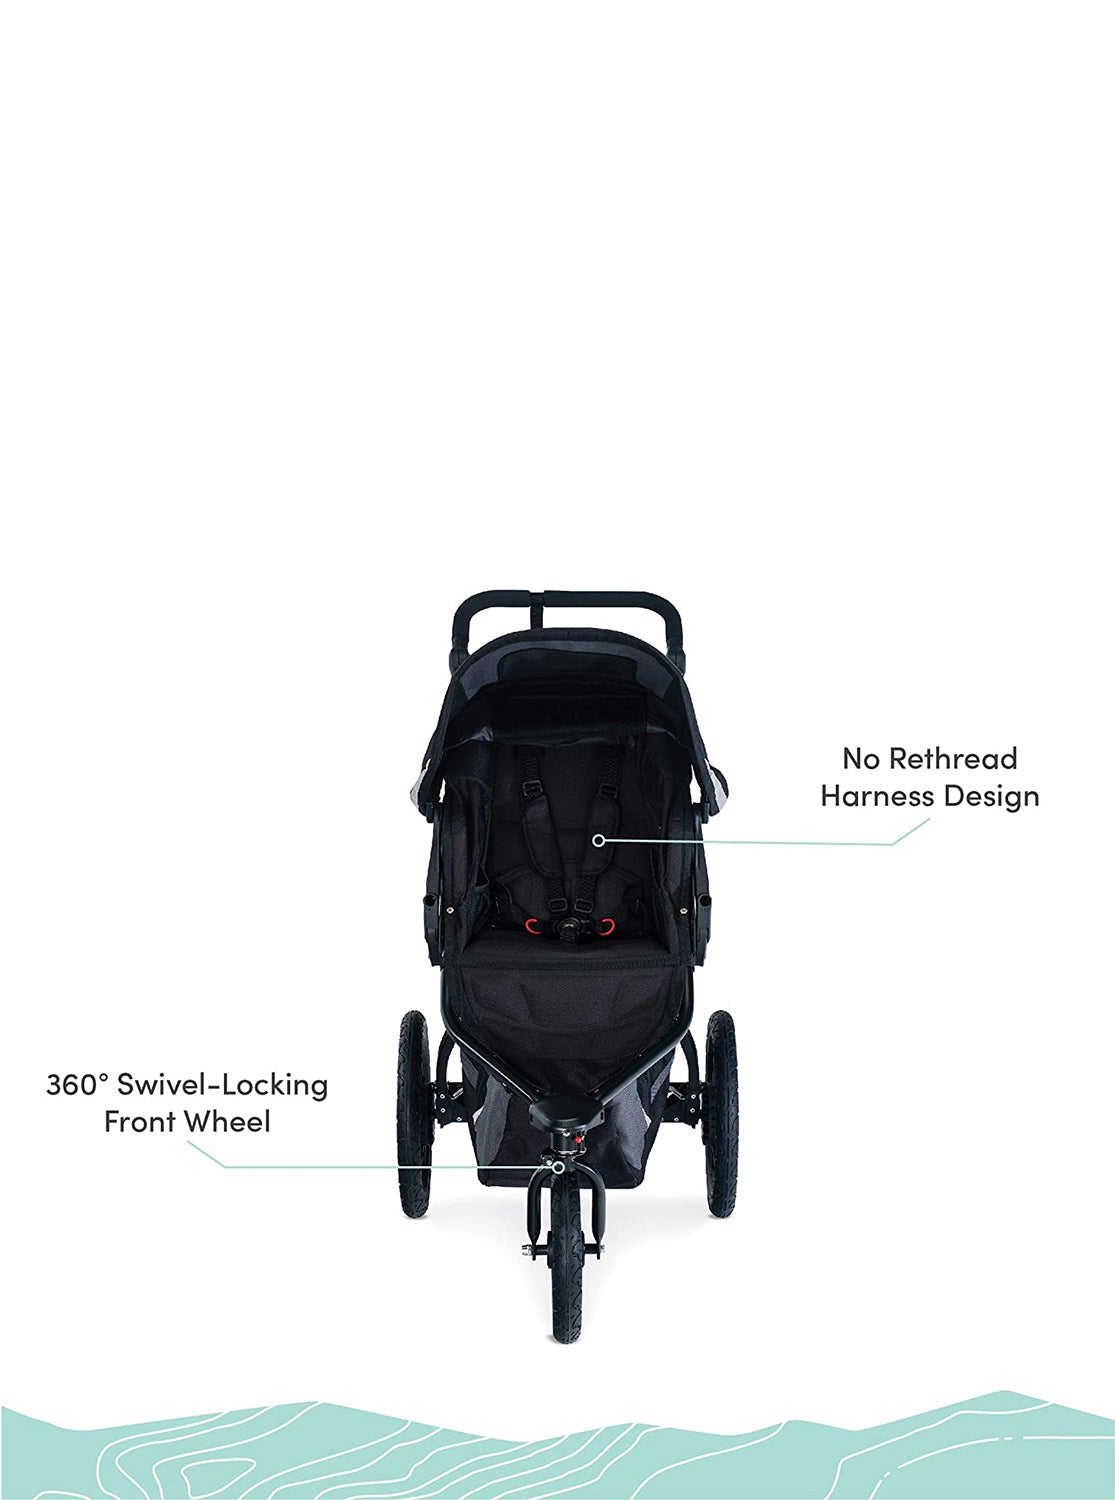 BOB Gear Revolution Flex 3.0 Jogging Stroller + Travel System with B-Safe 35 Infant Car Seat, -- ANB Baby